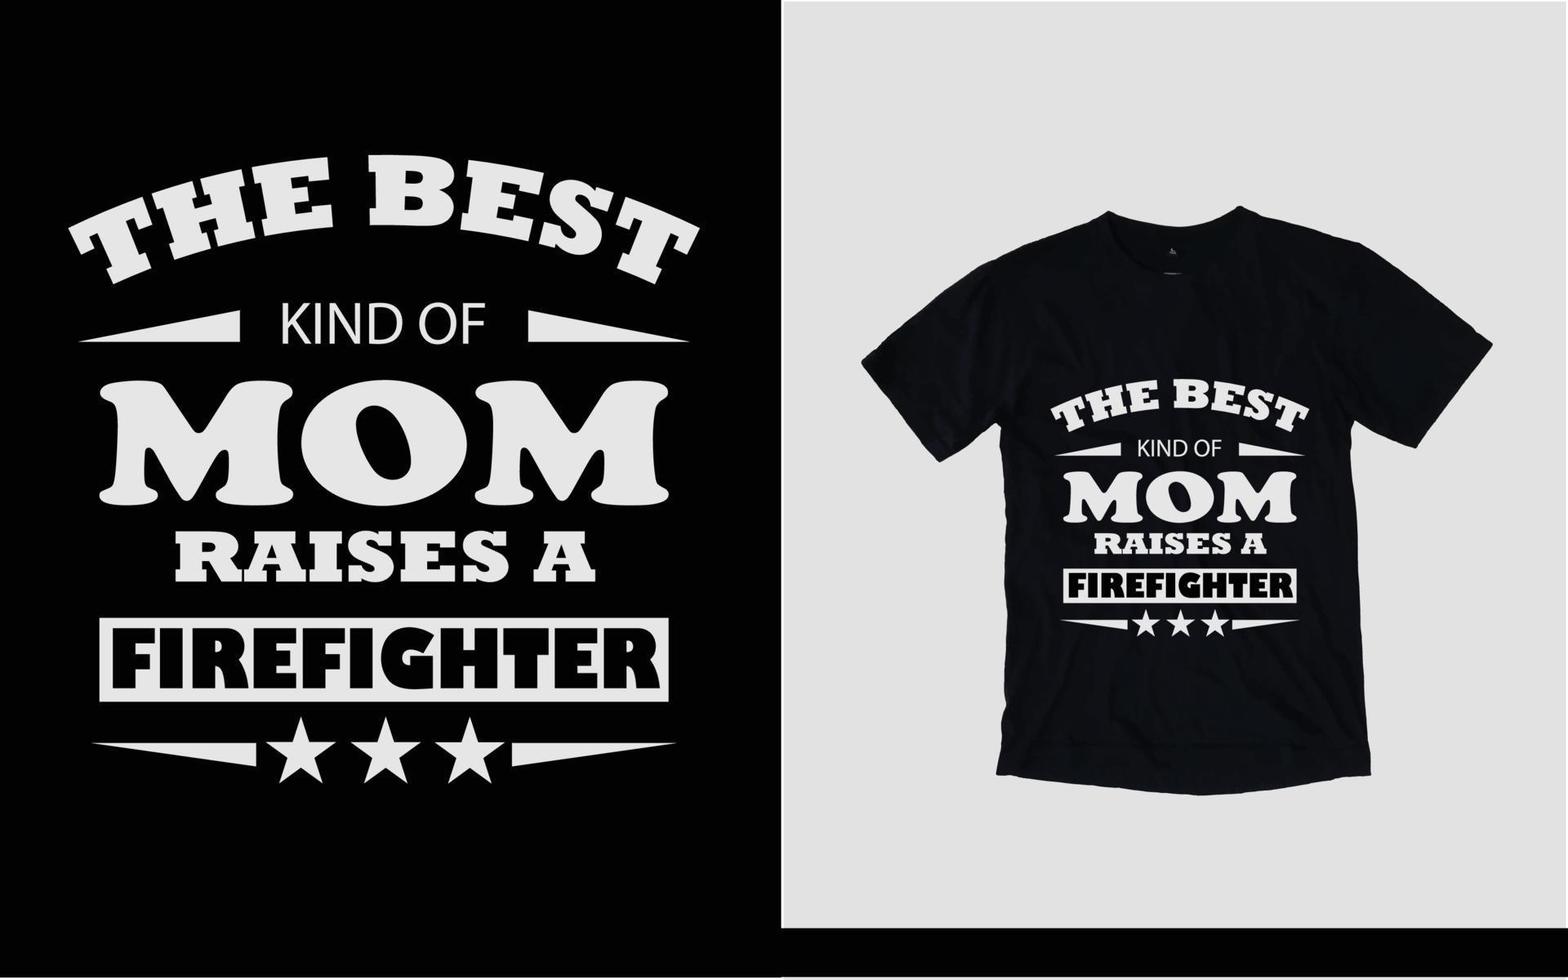 The best kind of mom raises a firefighter t-shirt design vector